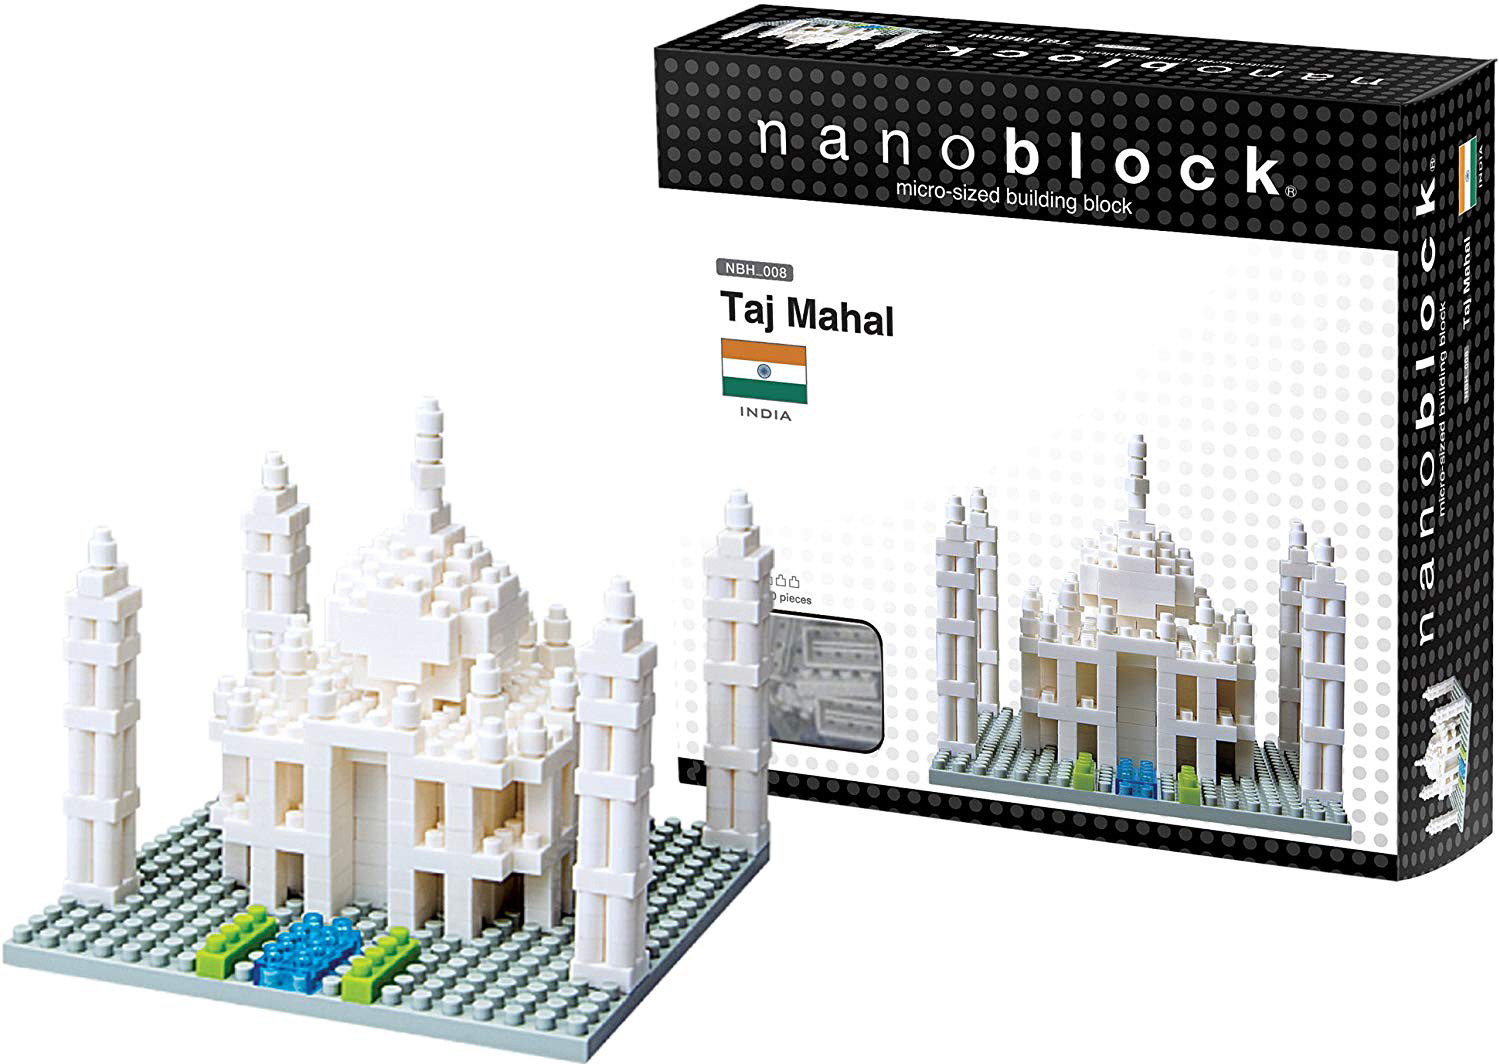 Nanoblock Taj Mahal Construction toy Micro Sized Blocks mini Nano Blocks NBH008 